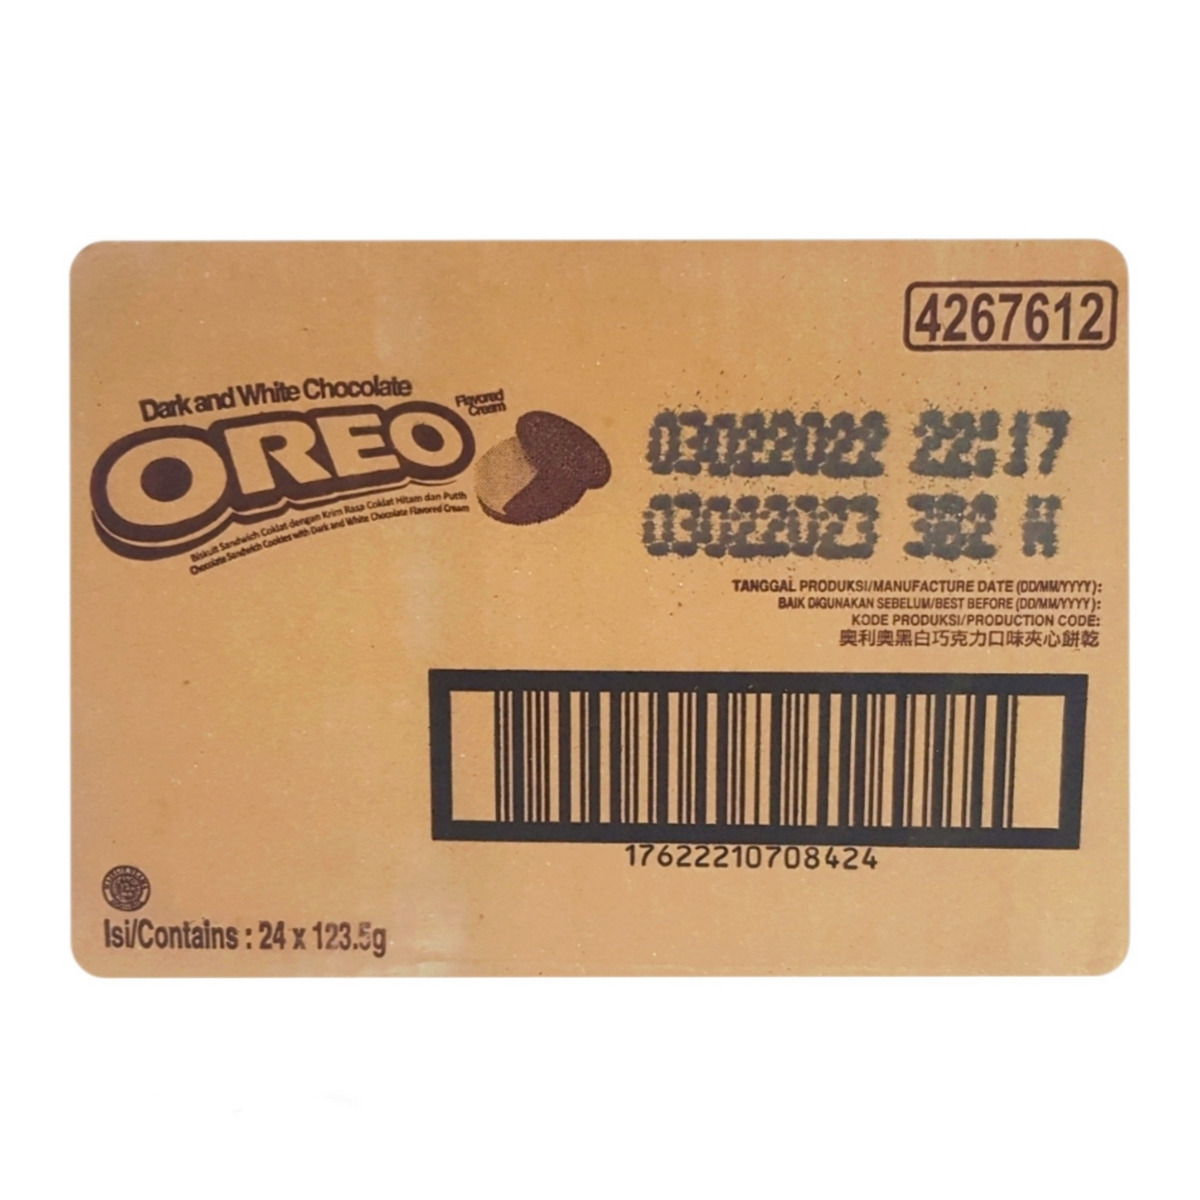 (Food) 24 Pcs Bundle Oreo Dark and White Chocolate Flavored Cream Sandwich Cookies Multi Pack (24X123.5grams) (Cargo)